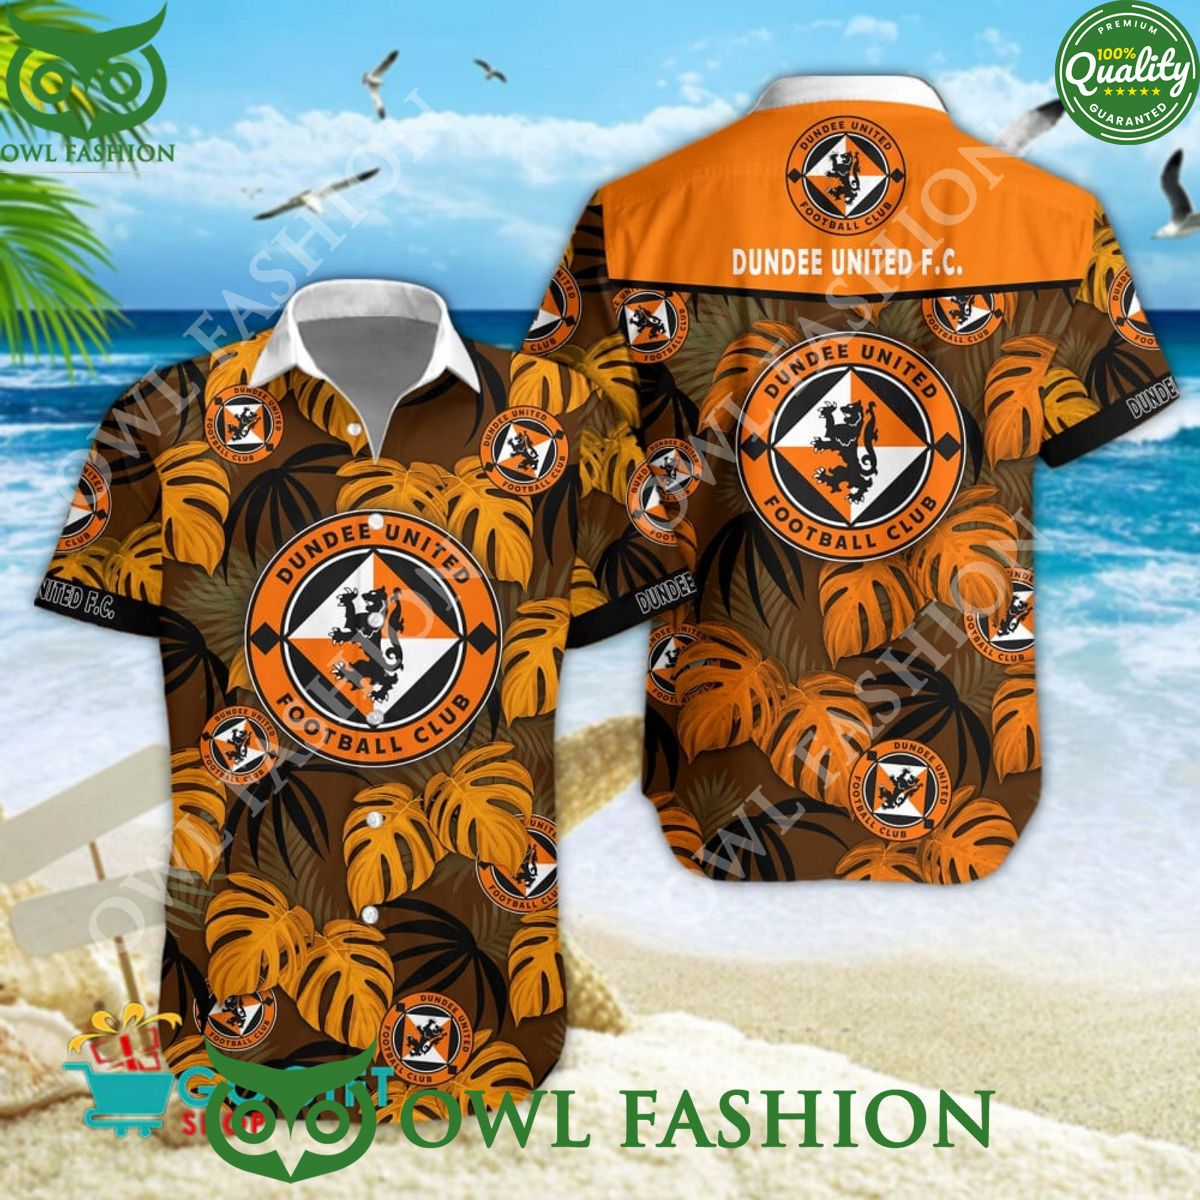 spfl championship dundee united f c tropical vibe hawaiian shirt 1 ozffr.jpg